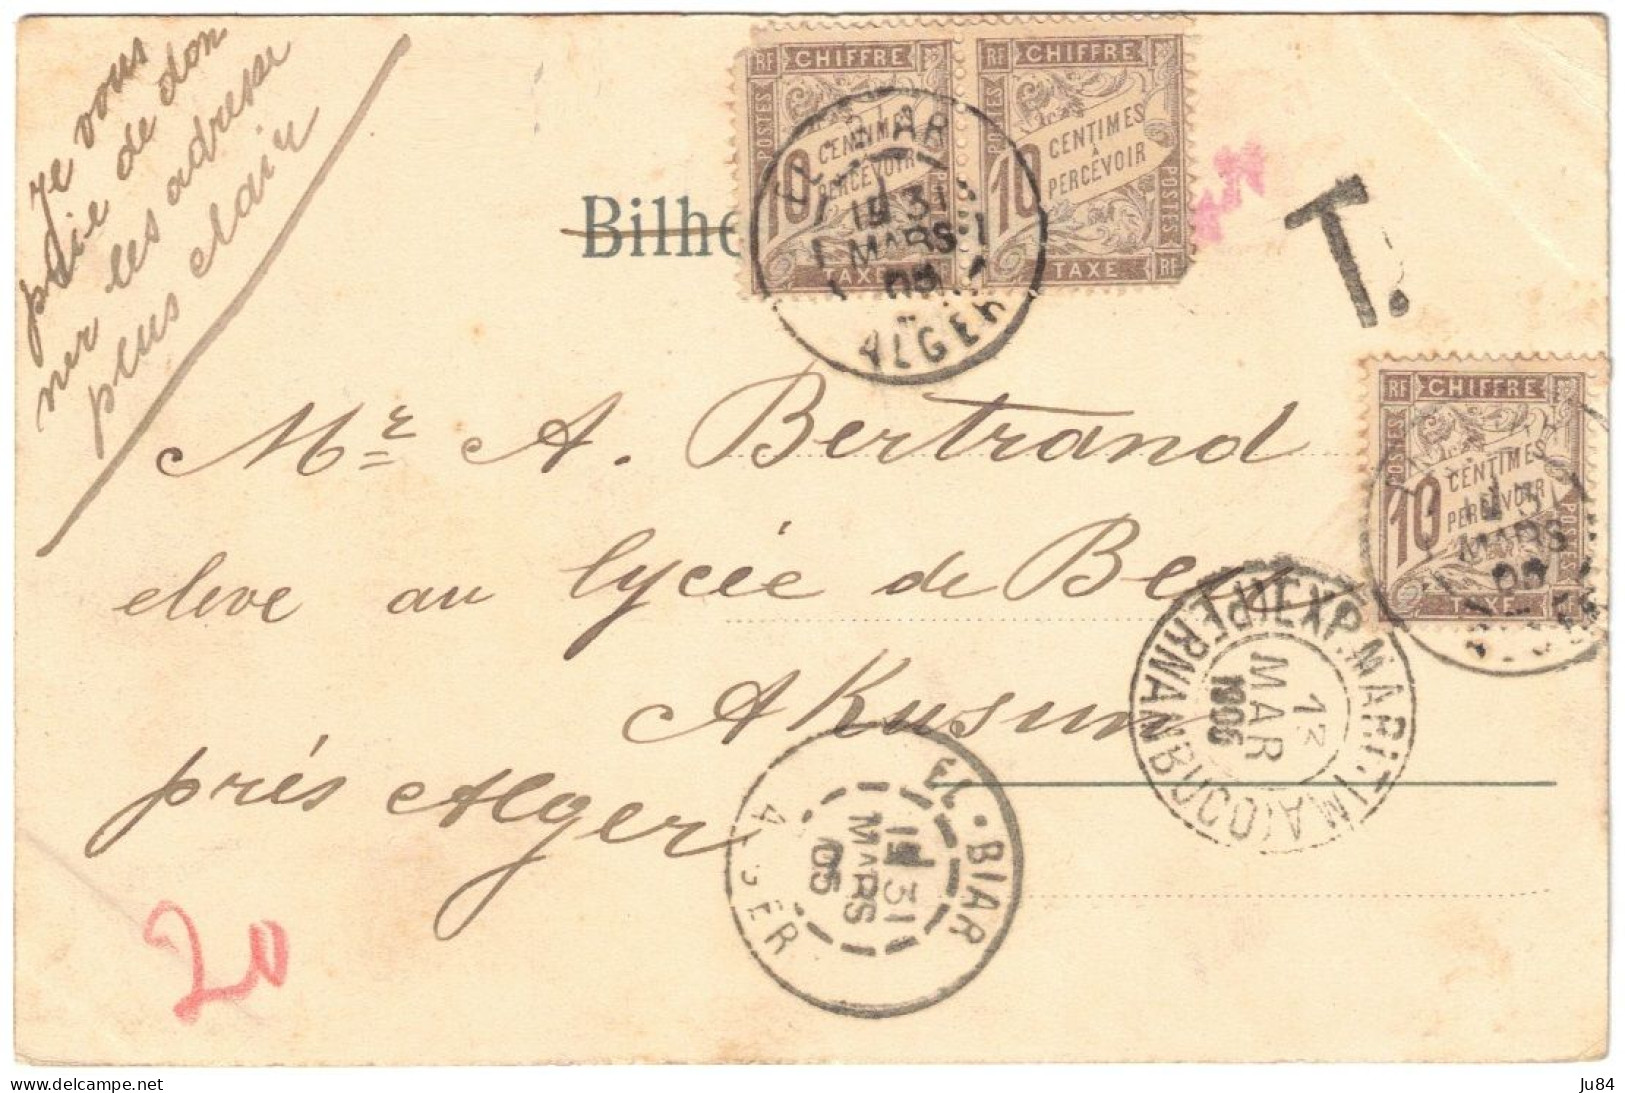 Brésil - Pernambuco - Rua Barao Da Victoria - Carte Postale Taxée En Arrivée Pour Kusun (Algérie) - El Biar - 1905 - Lettres & Documents